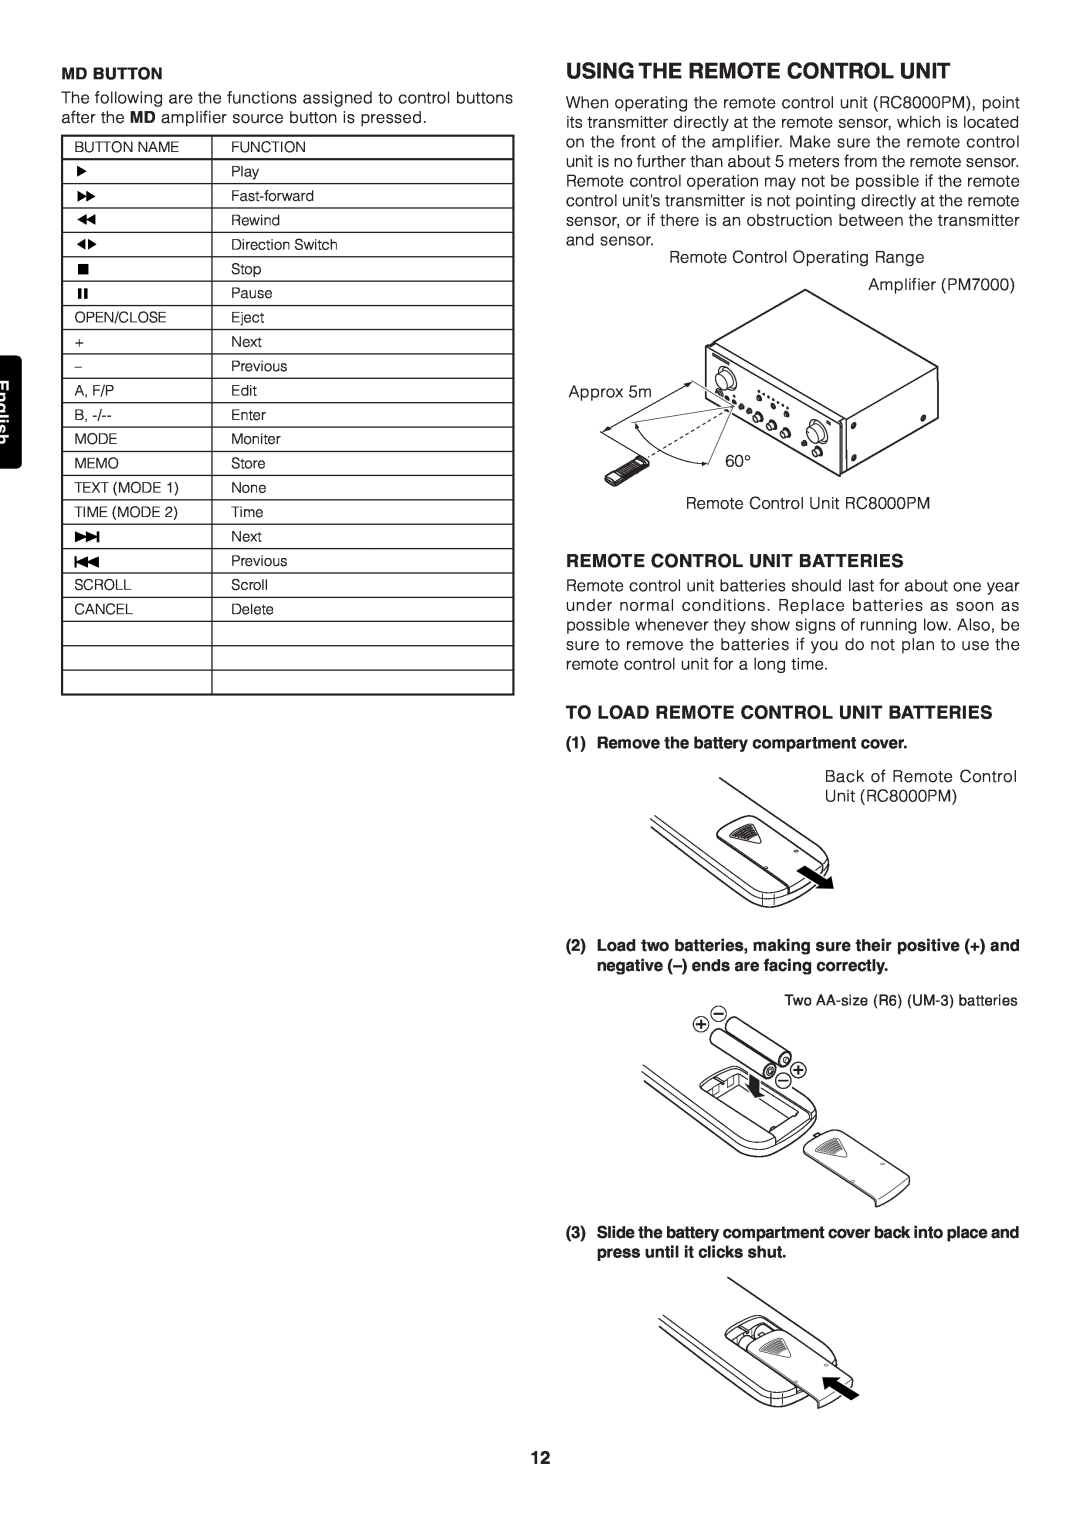 Marantz PM7000 manual Using The Remote Control Unit, English, Remote Control Unit Batteries, Md Button 